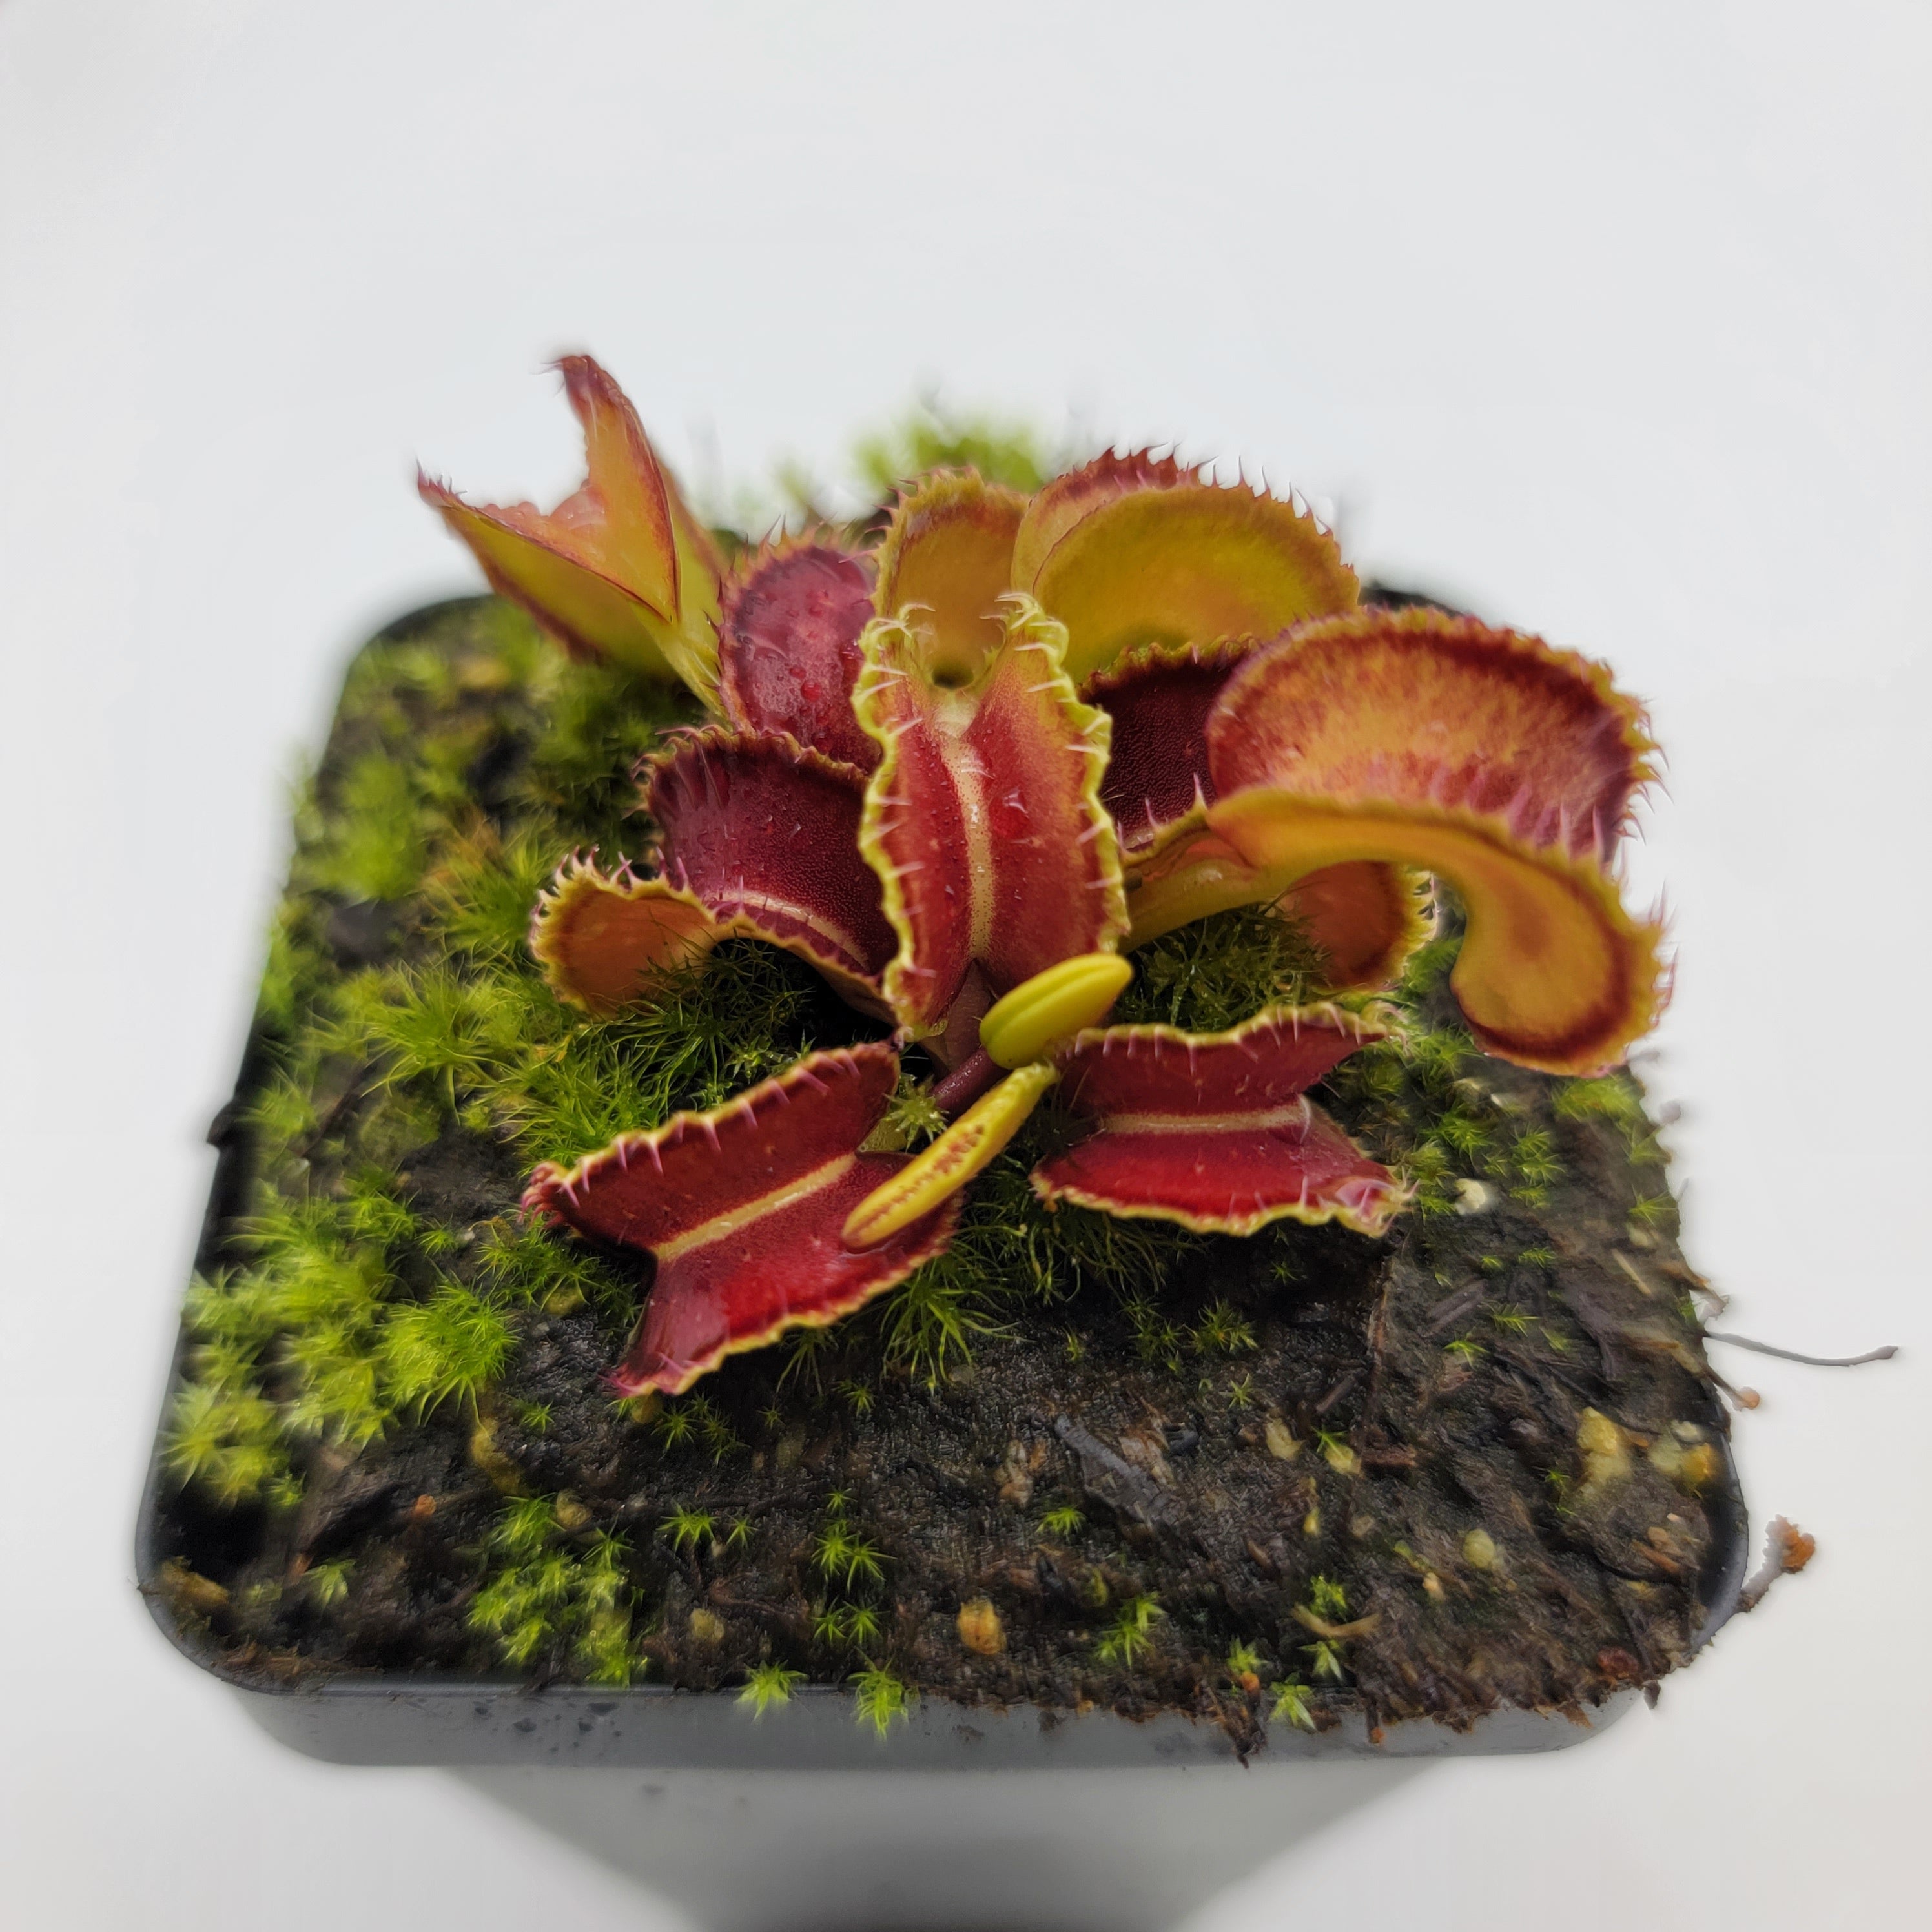 Venus flytrap (Dionaea muscipula) "Kim Jong-il" - Rainbow Carnivorous Plants LLC